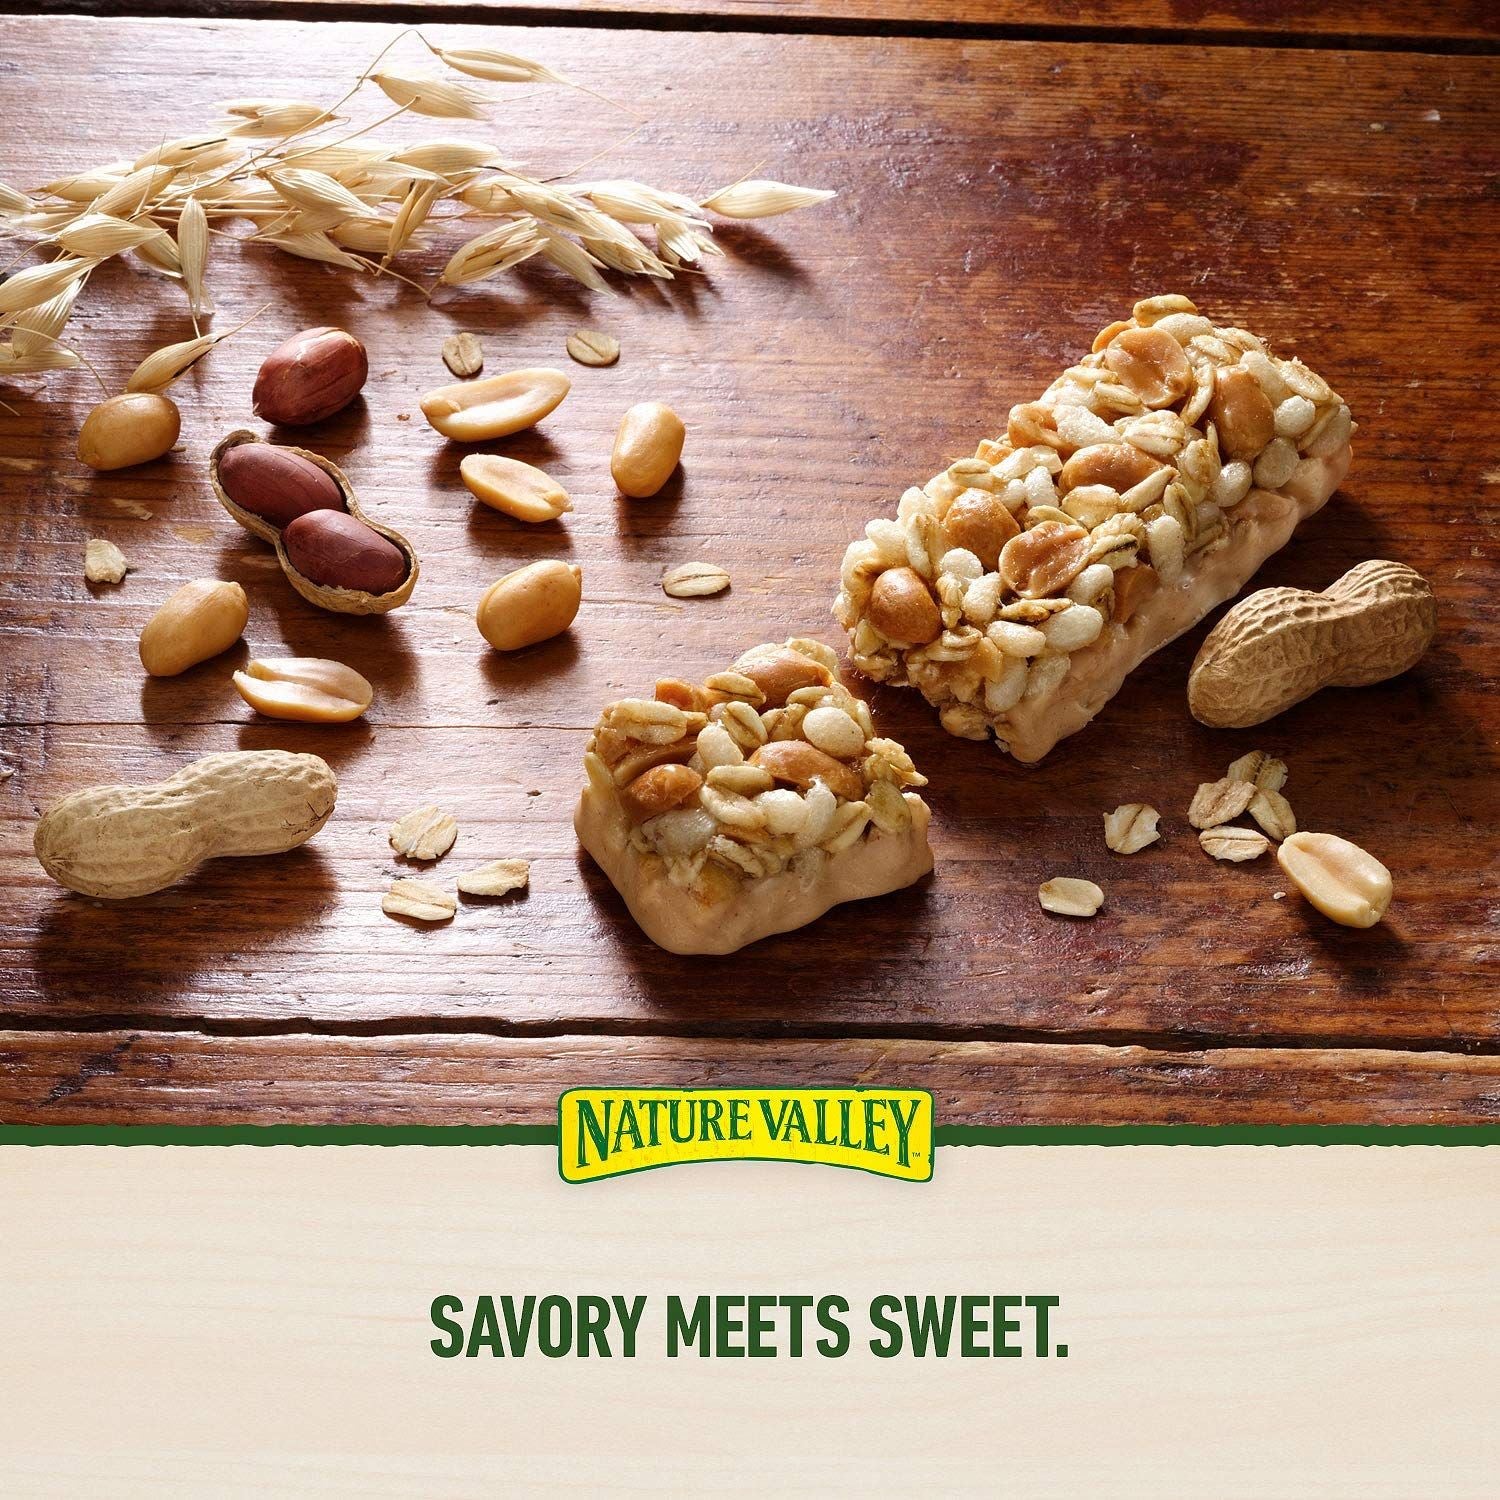 Nature Valley Sweet &amp; Salty Peanut Granola Bars (1.2 oz. bars, 36 ct.) (2 Pack)